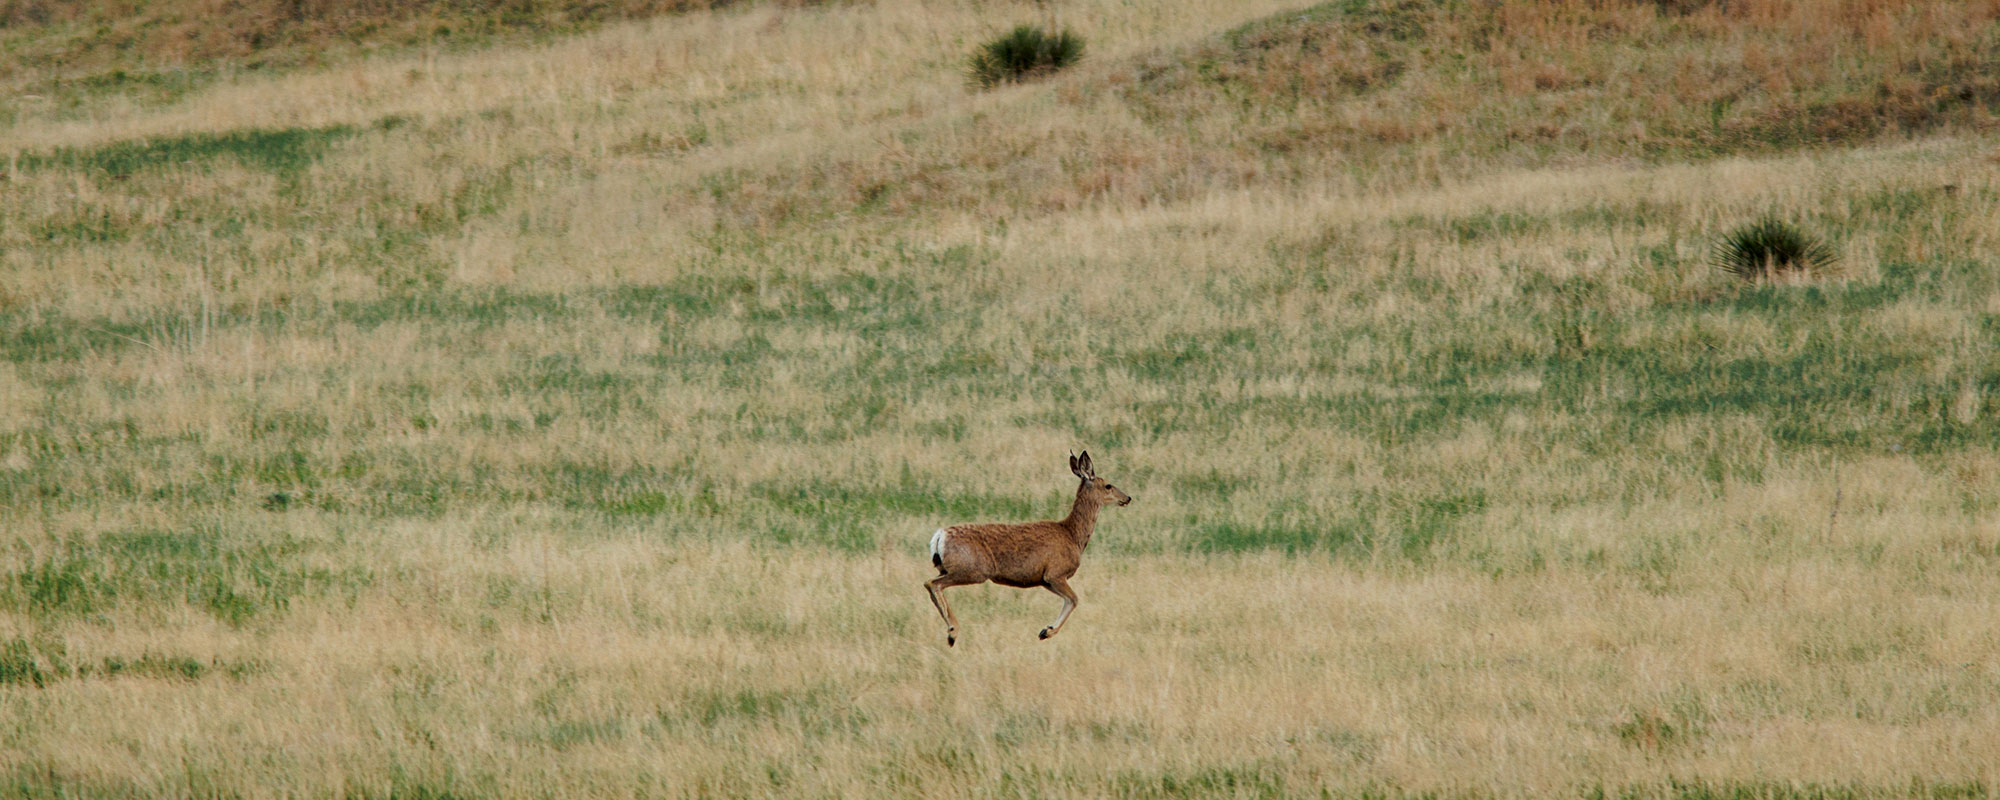 Deer running through pasture